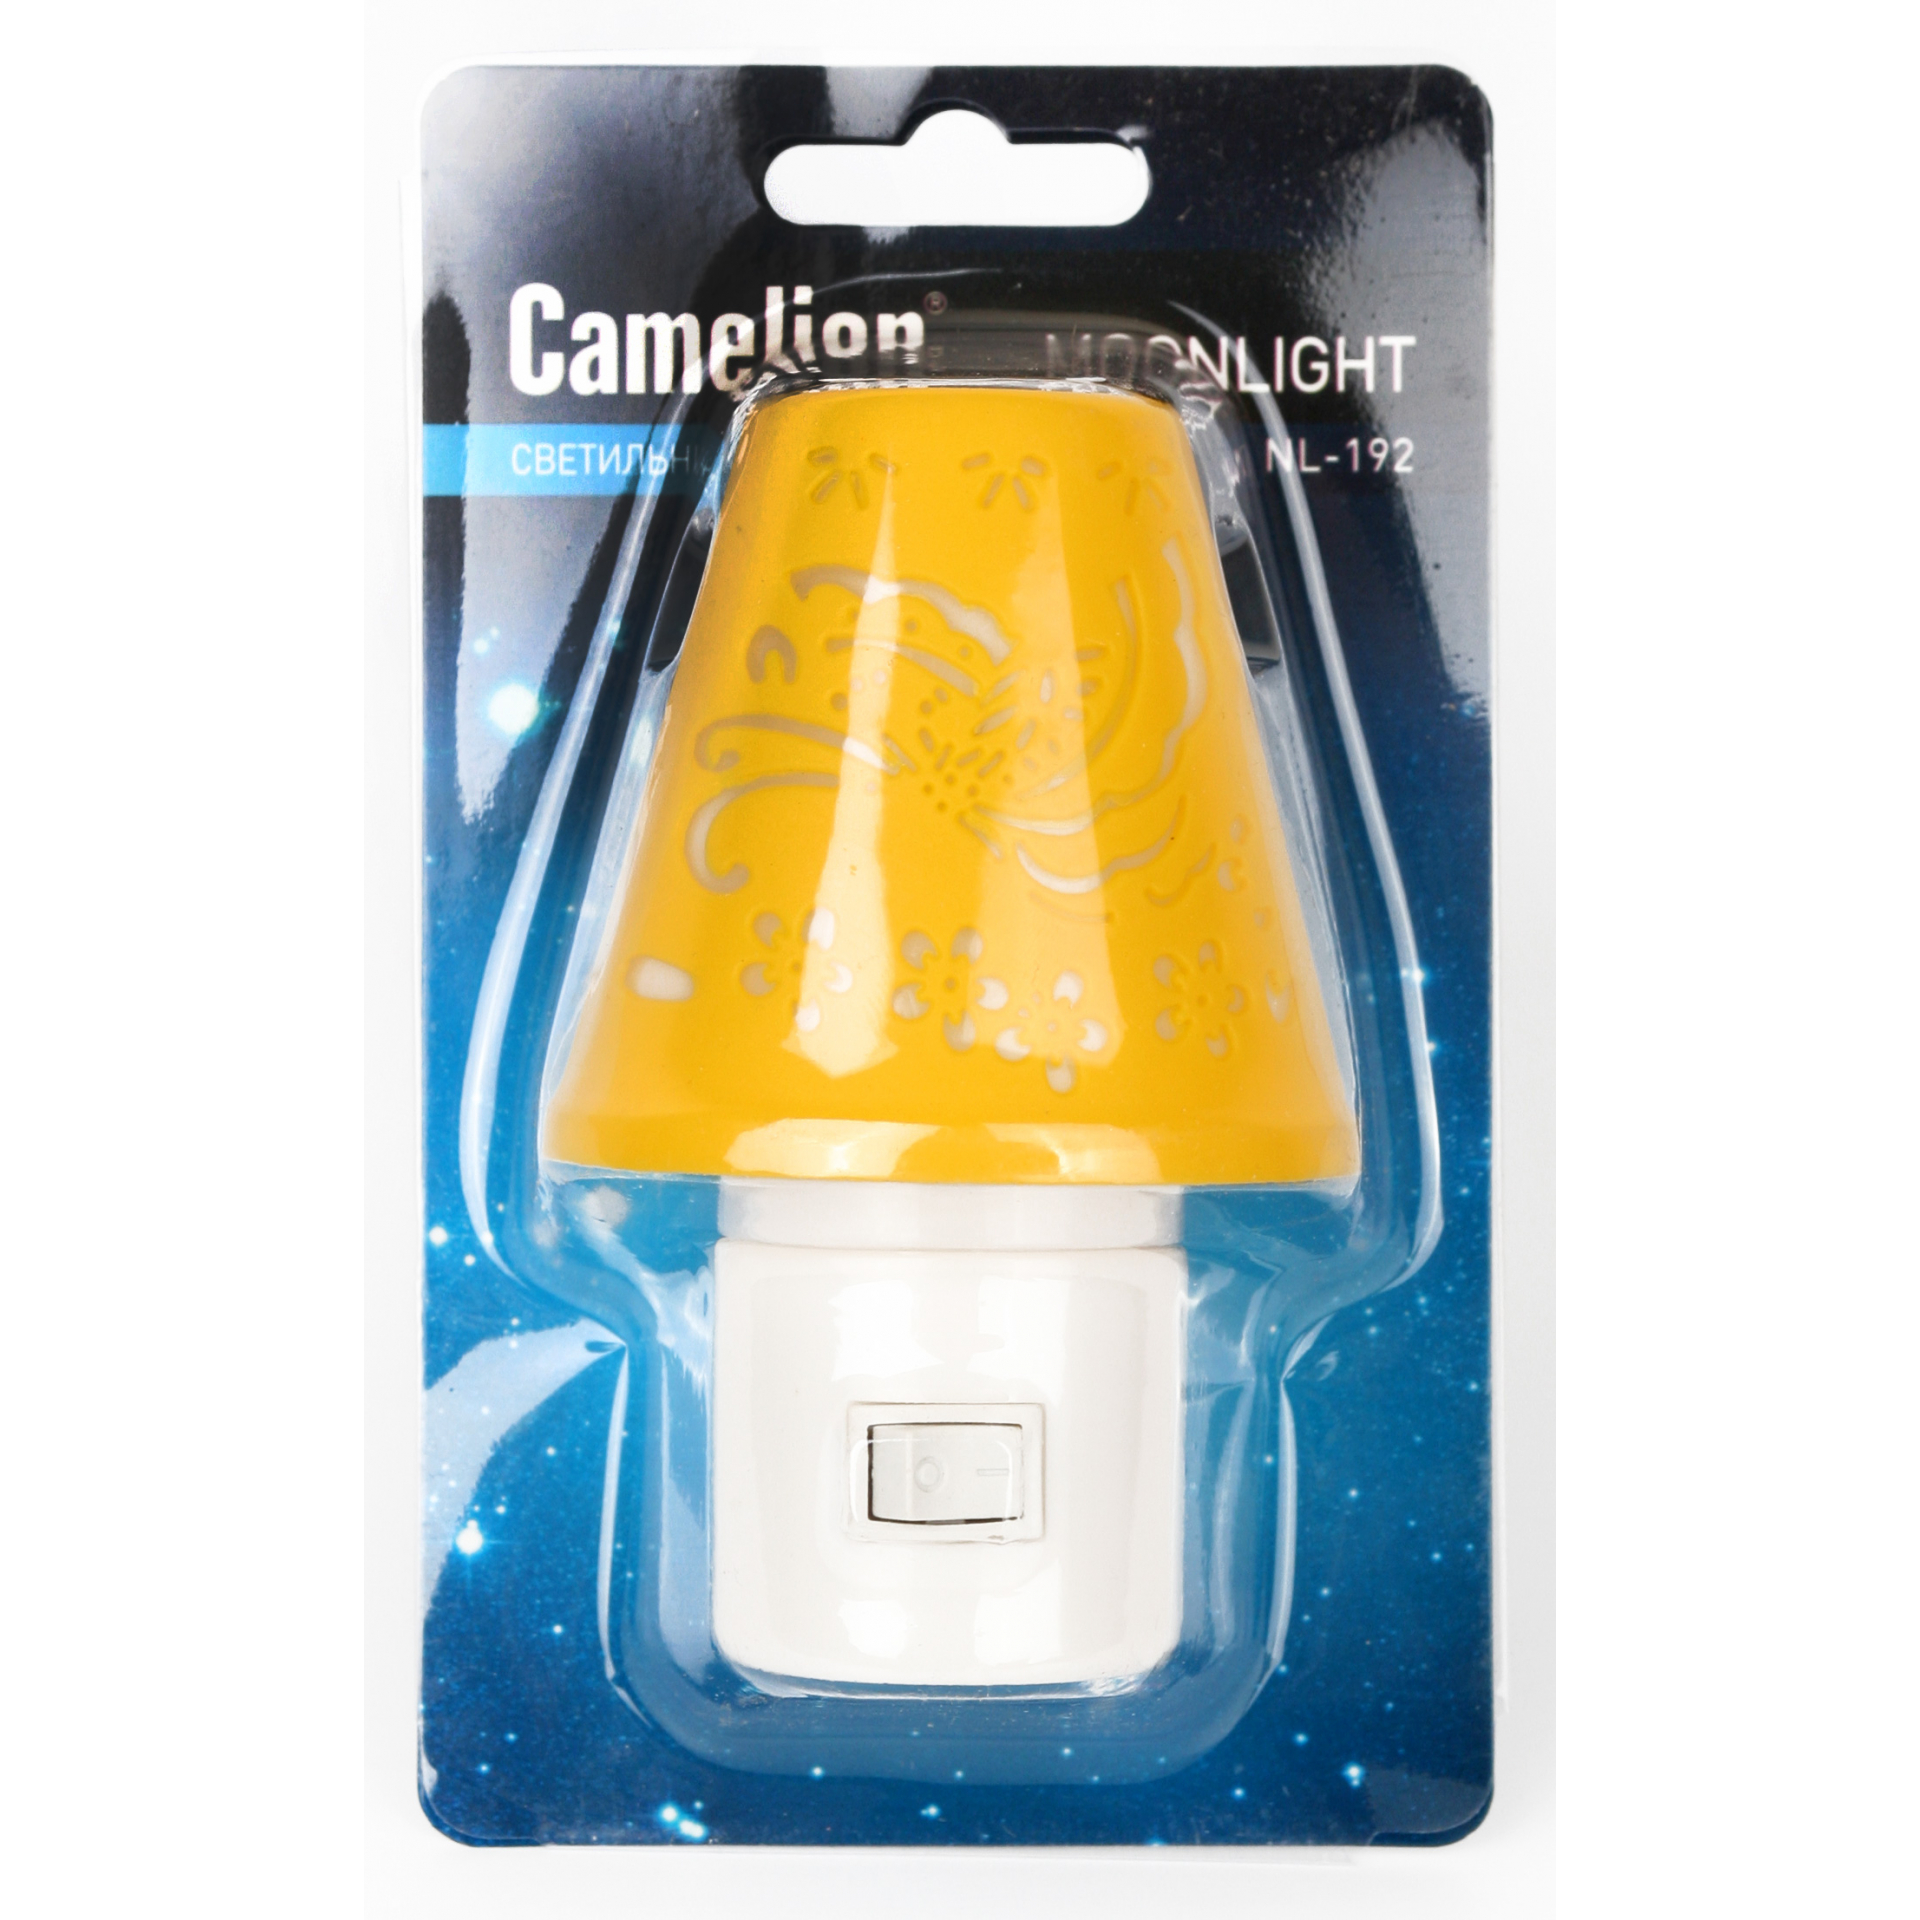 Camelion NL-192 "Светильник желтый" (LED ночник с выкл, 220V)